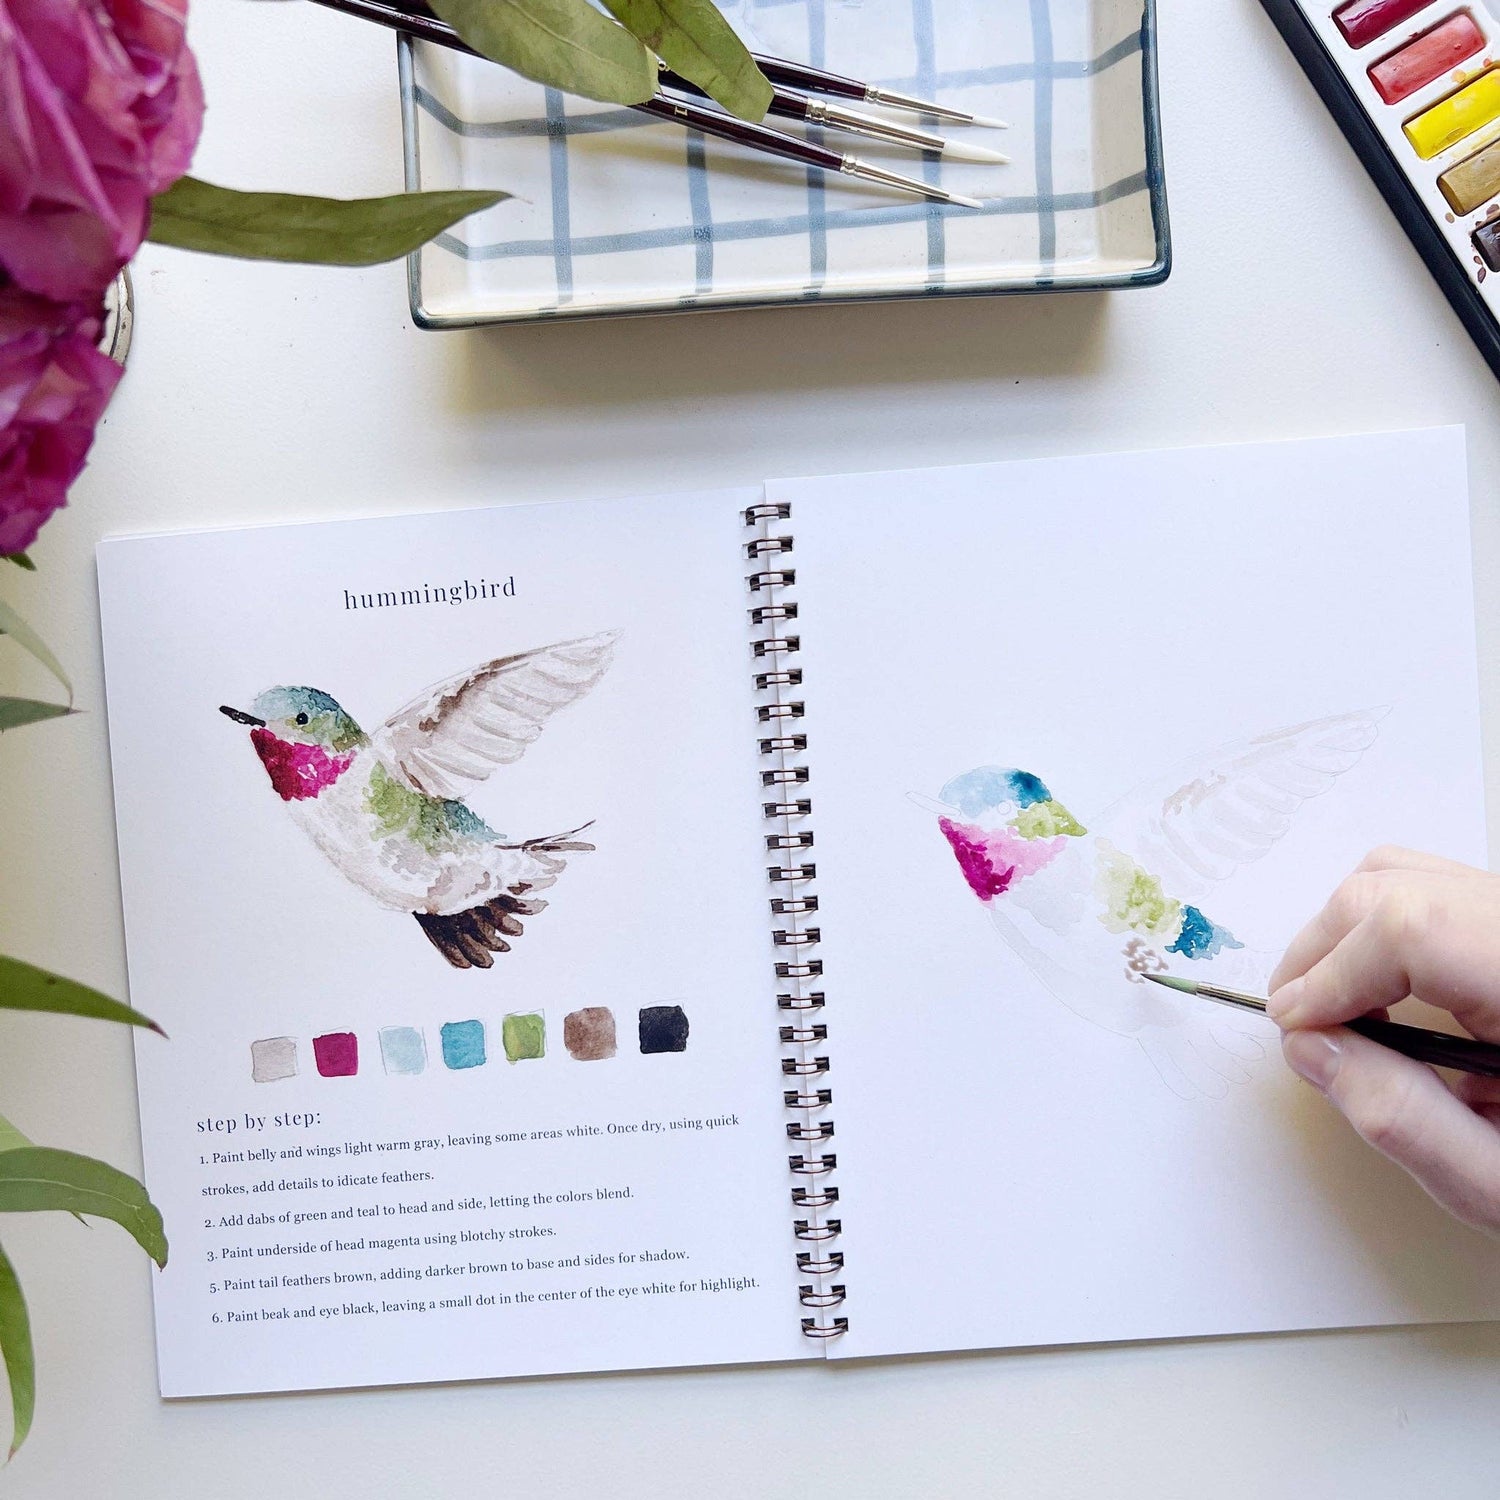 Watercolor Workbook | Birds - So &amp; Sew Boutique